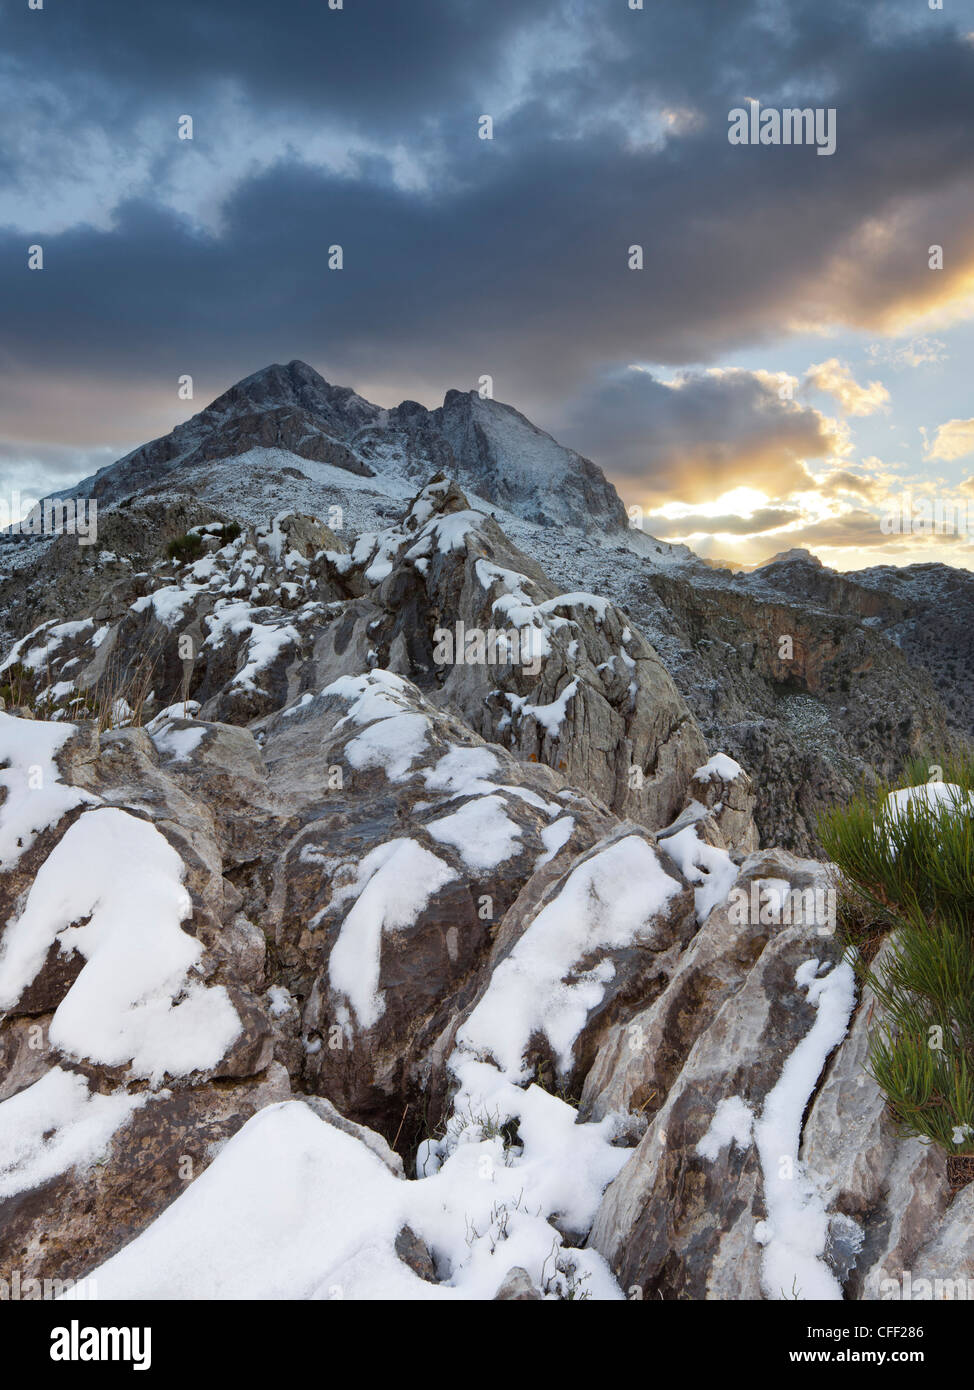 Schneebedeckte Berge in den Abend, Puig Major, Puid de ses Vinyes, E Coll de Cals Reis, Serra de Tramuntana, Mallorca, Spanien Stockfoto